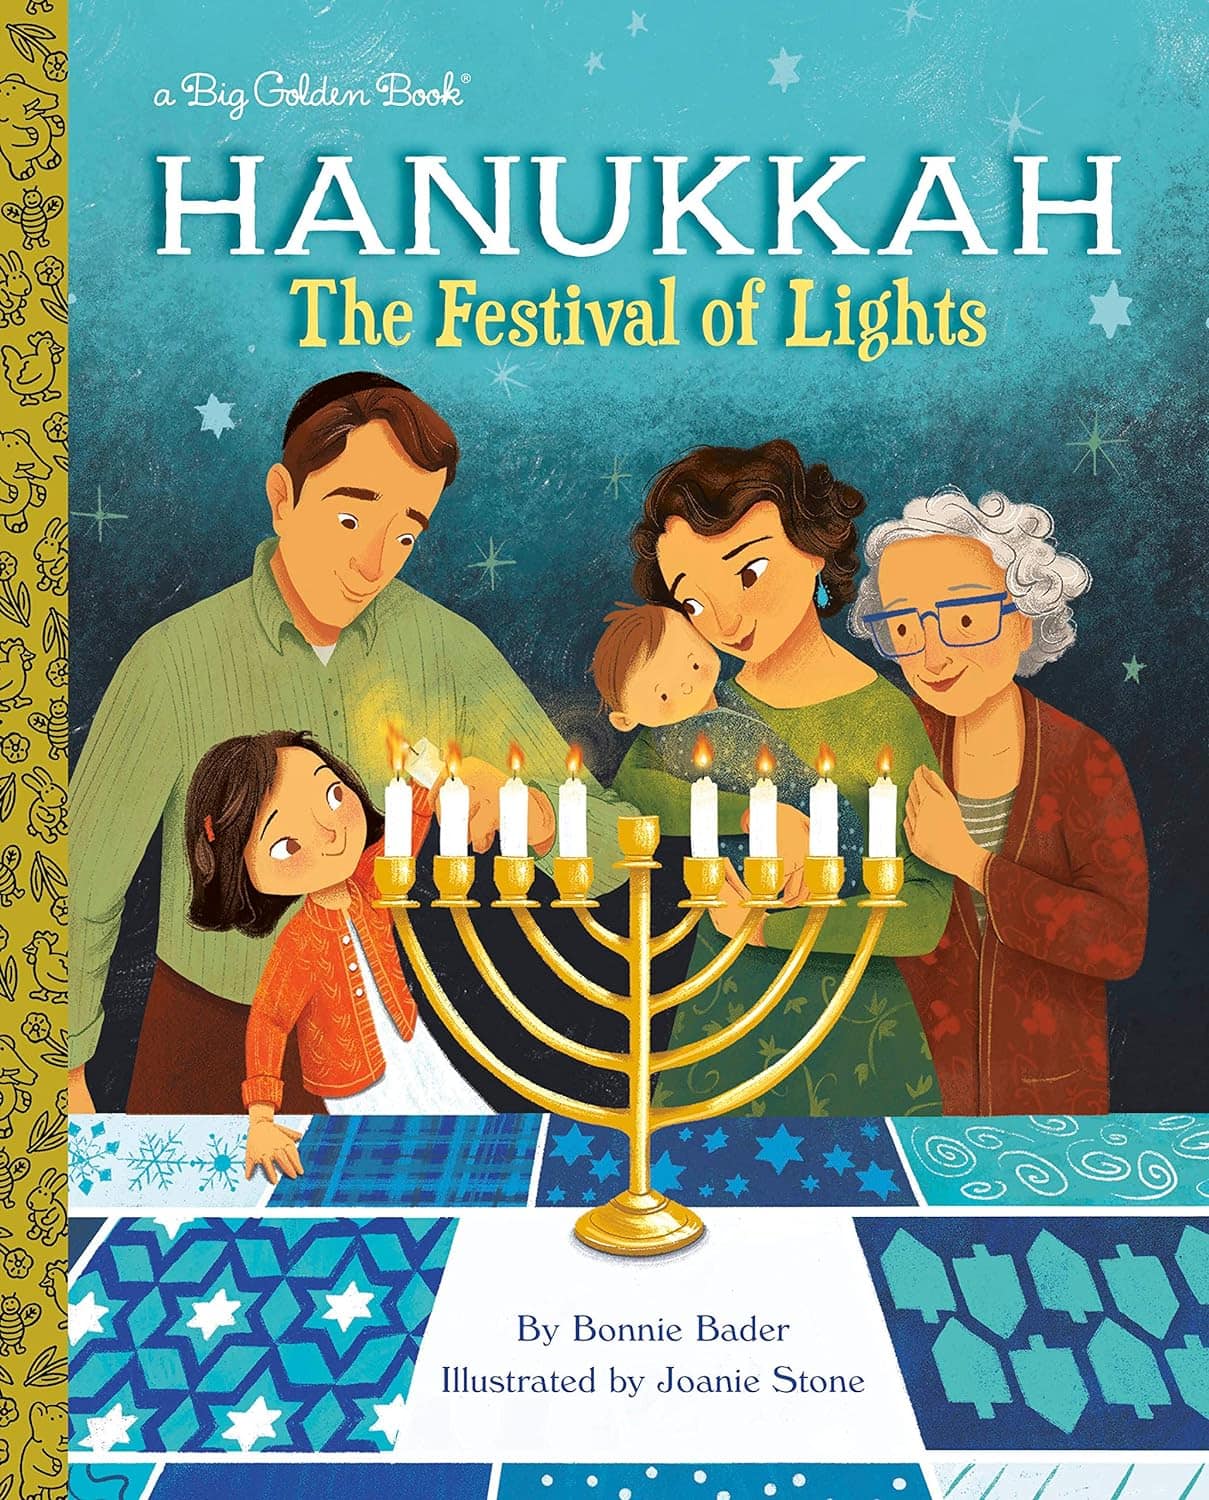 "Hanukkah: The Festival of Lights" by Bonnie Bader